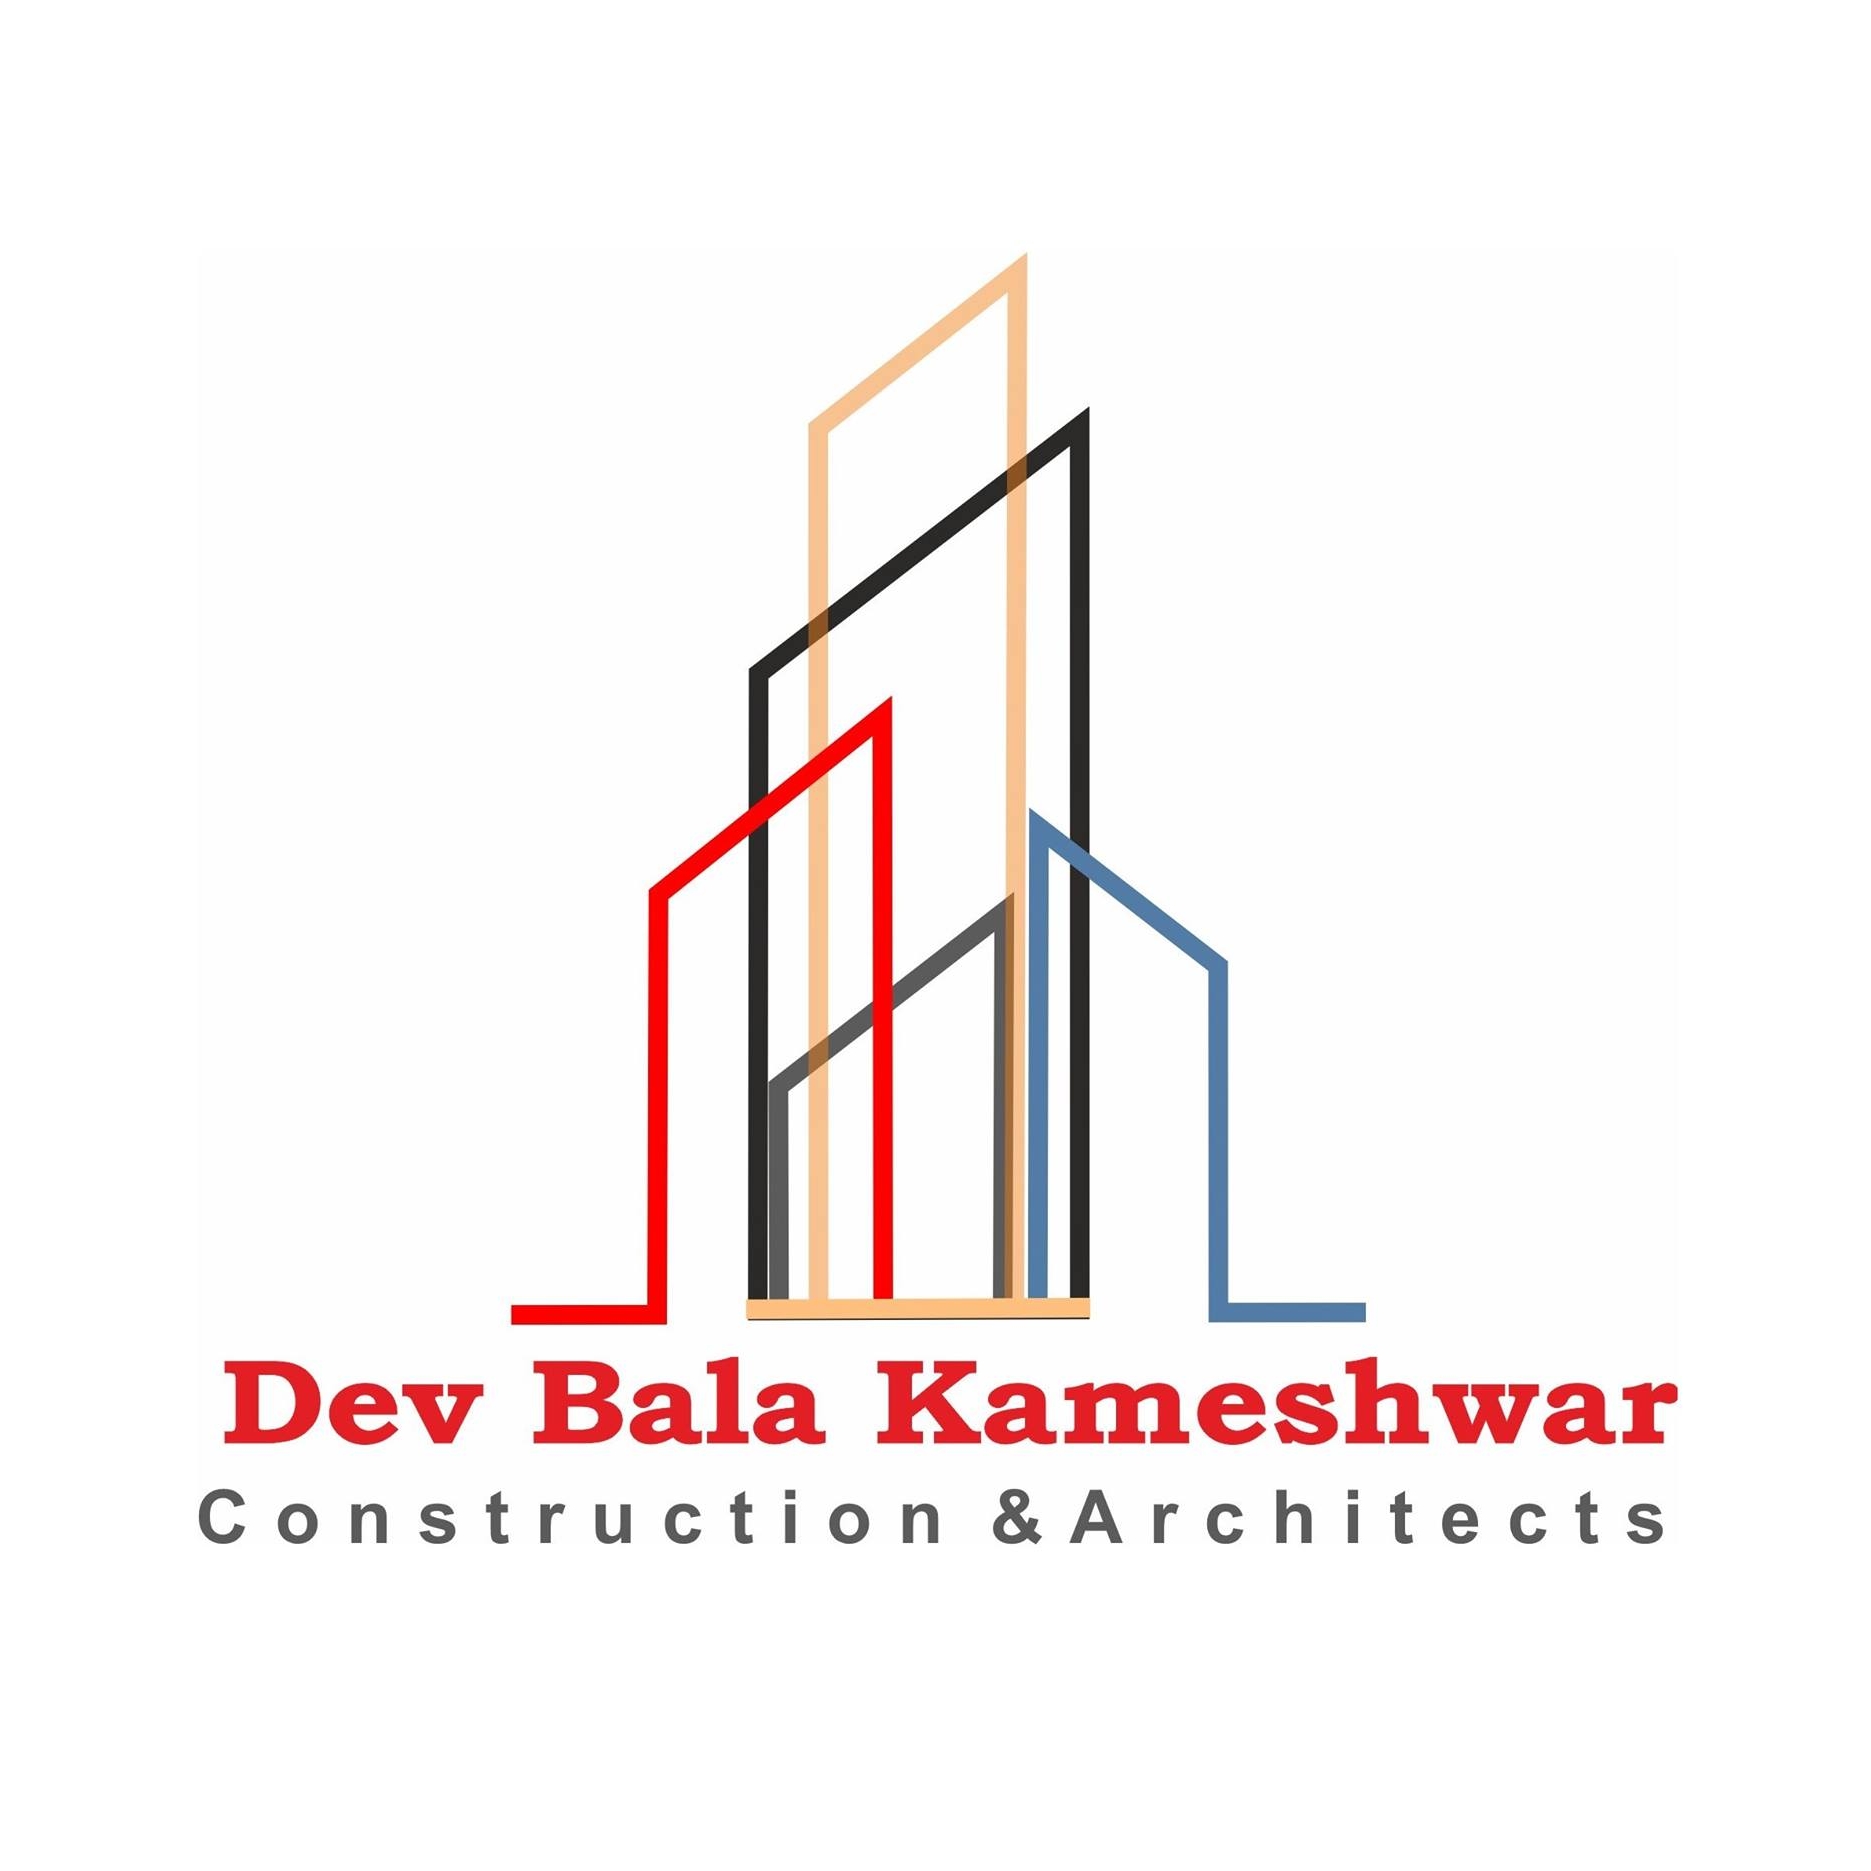 Dev Bala Kameshwar Construction and Architects Logo